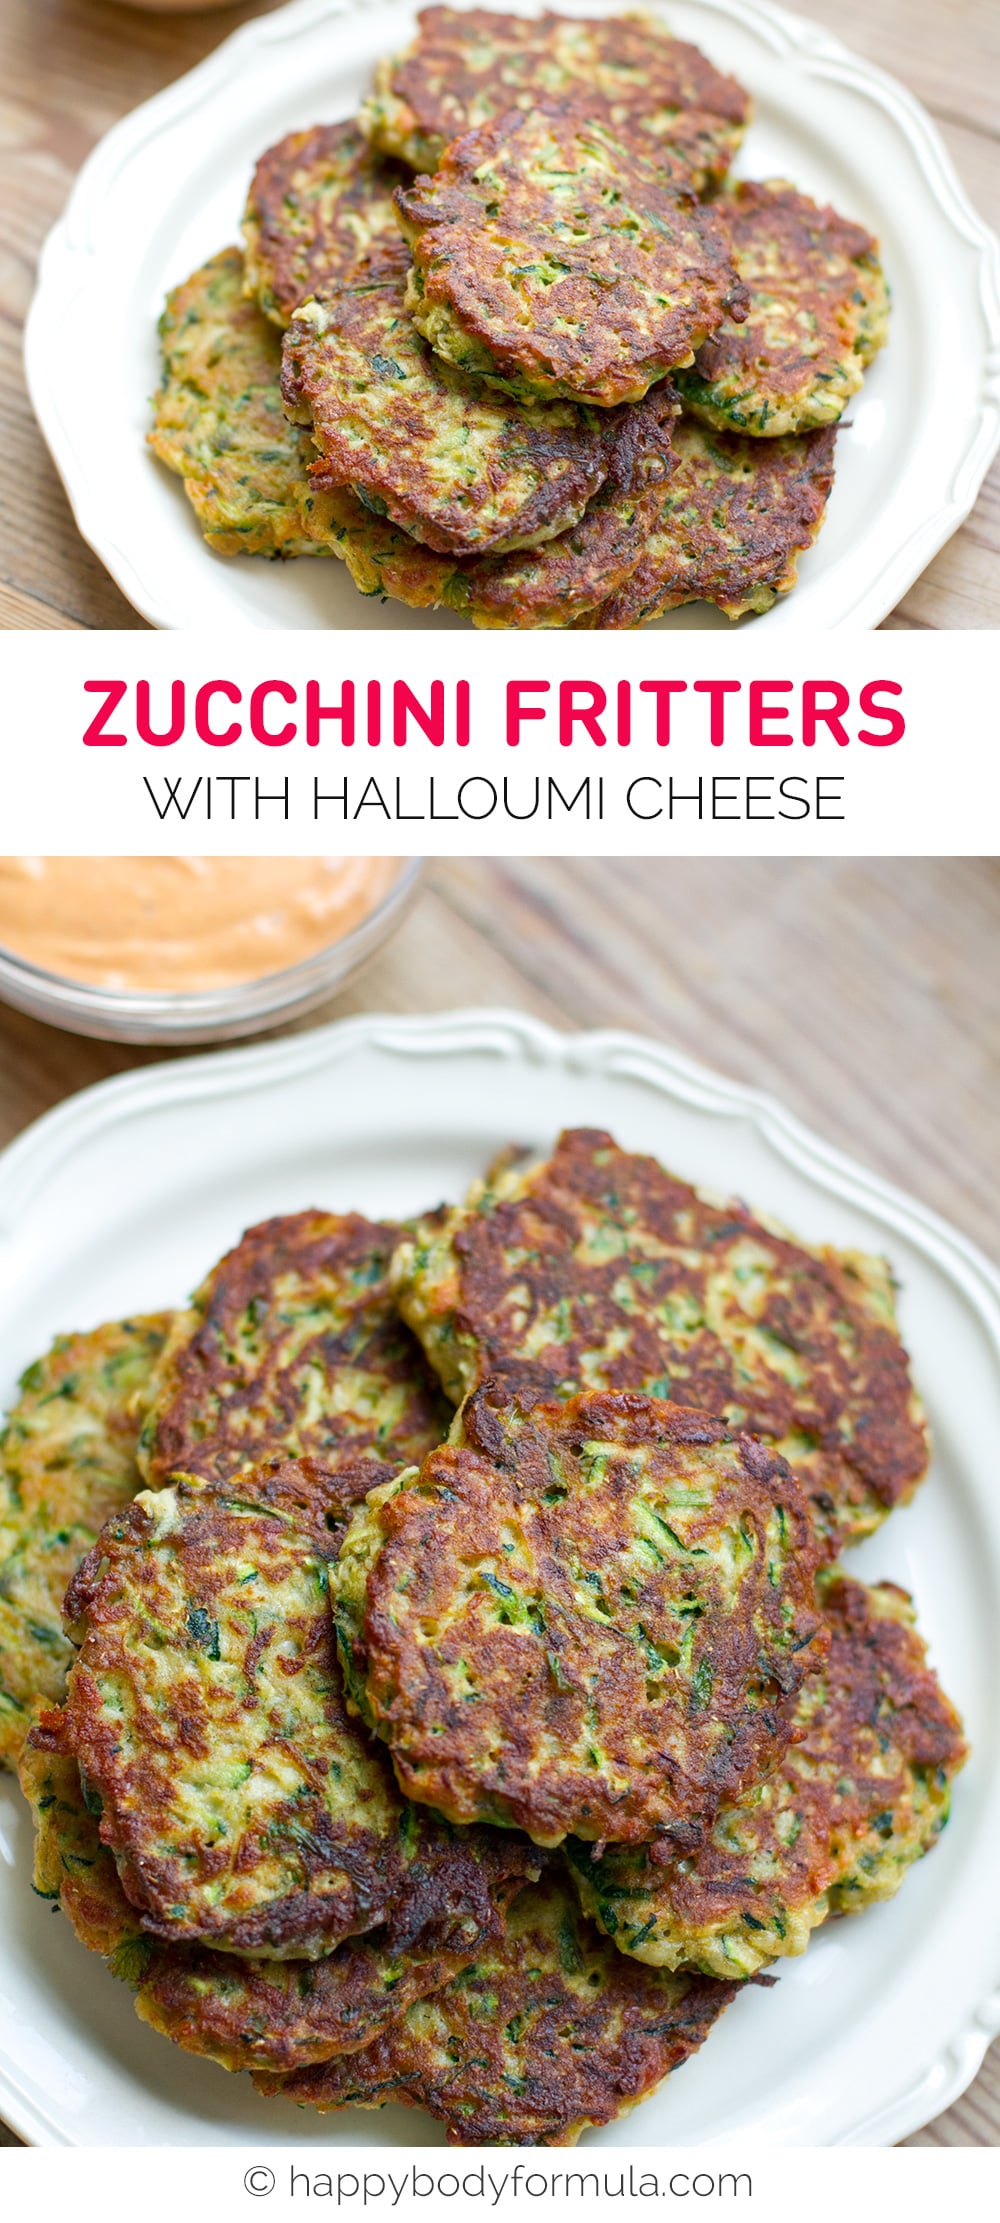 Zucchini & Halloumi Cheese Fritters with Smokey Chipotle Aioli (primal, gluten-free, vegetarian)